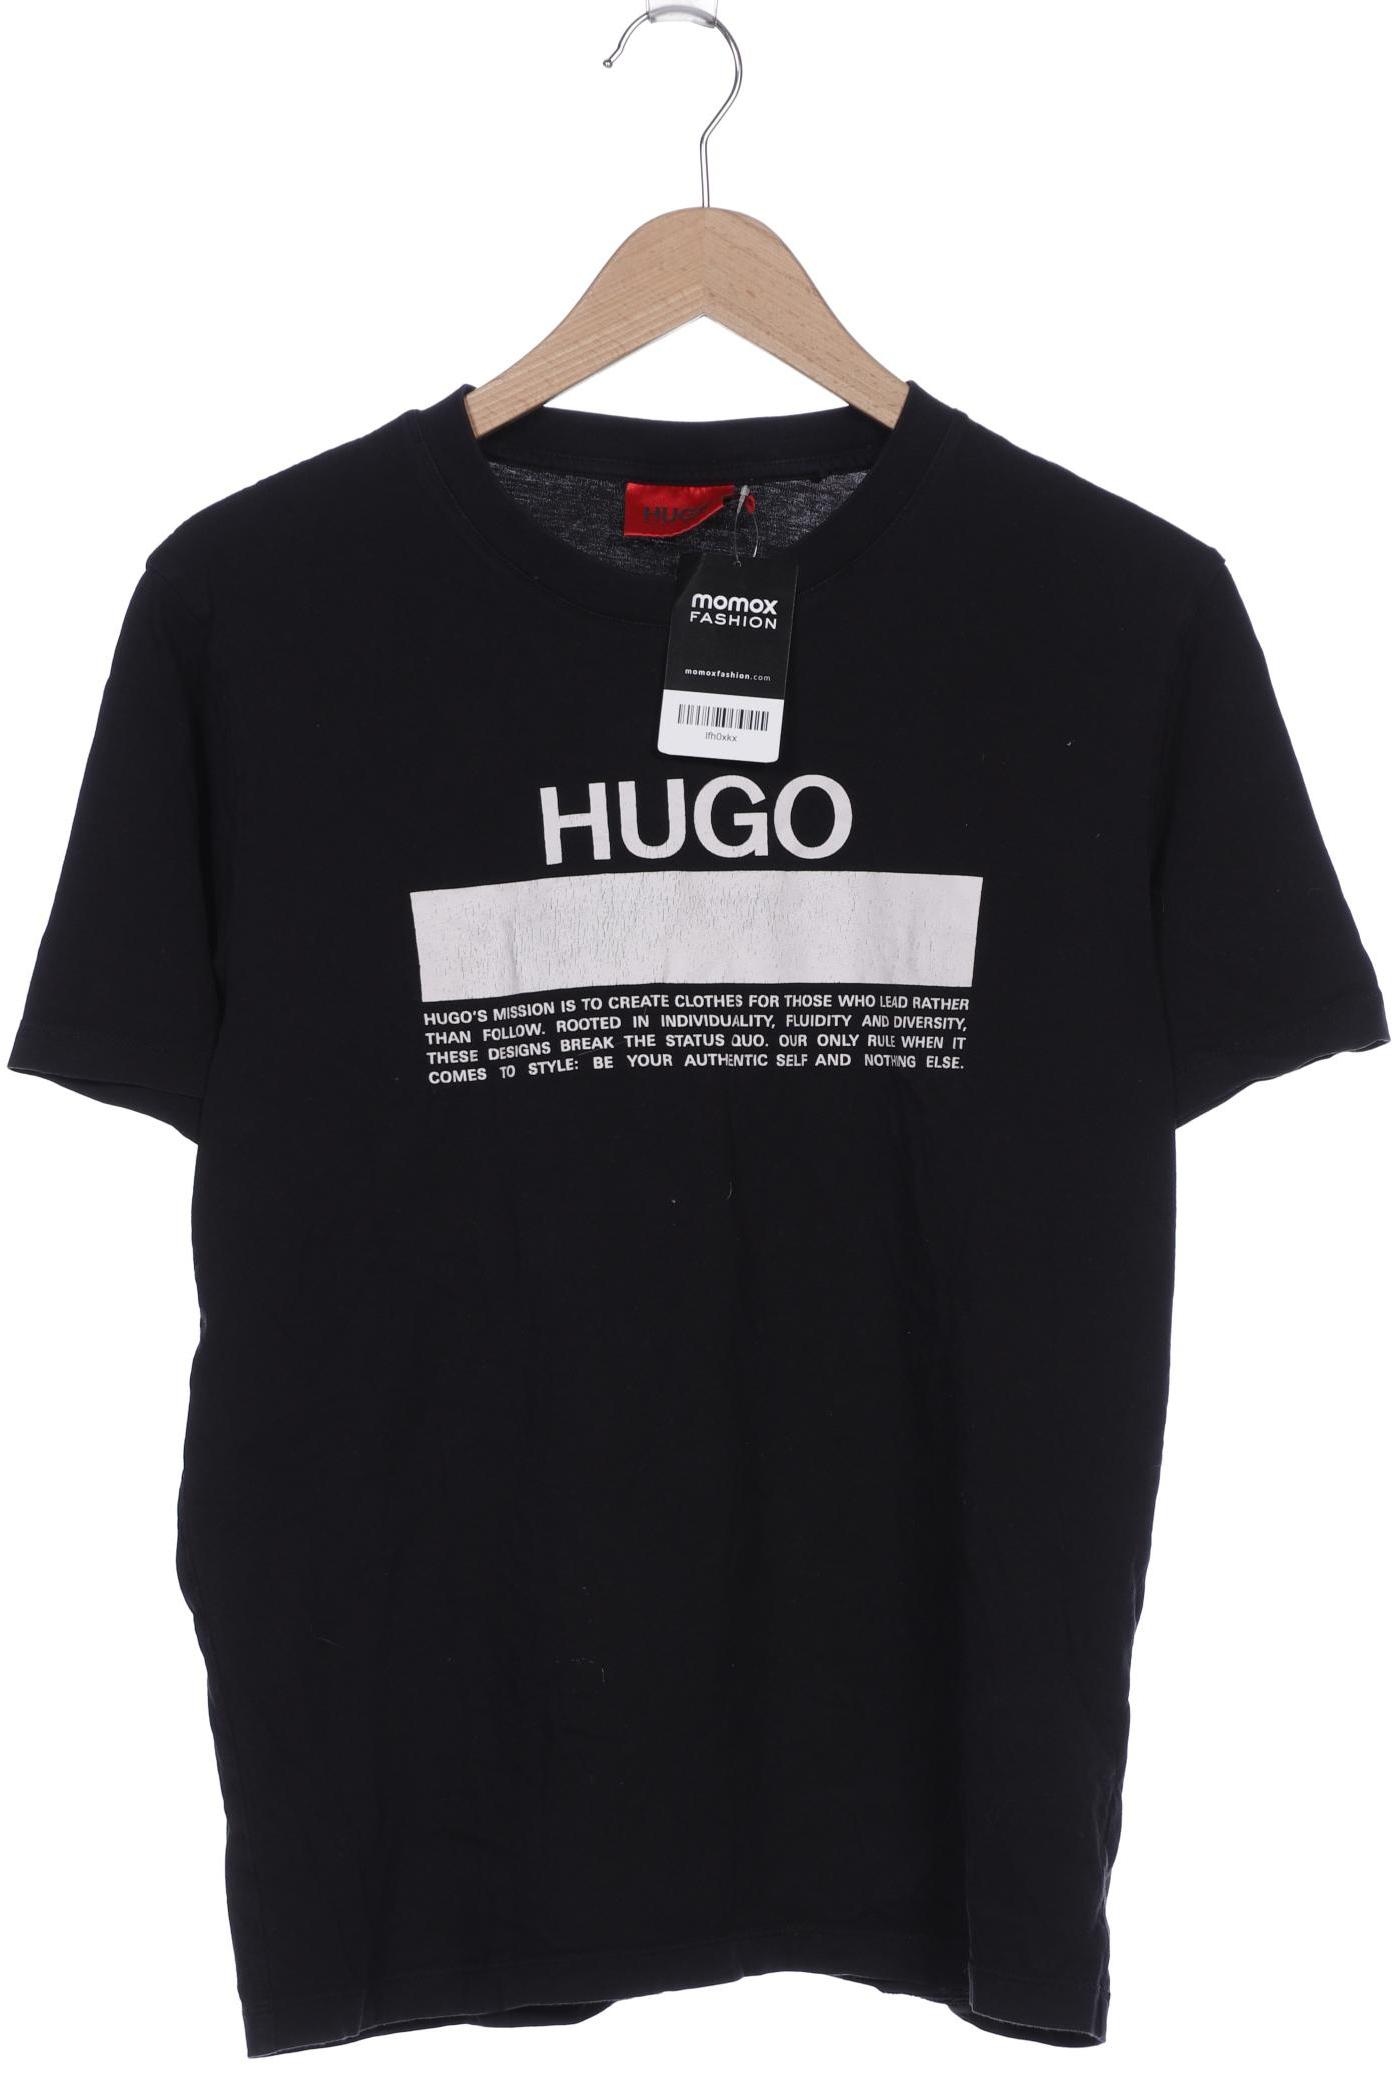 HUGO by Hugo Boss Herren T-Shirt, schwarz von HUGO by Hugo Boss